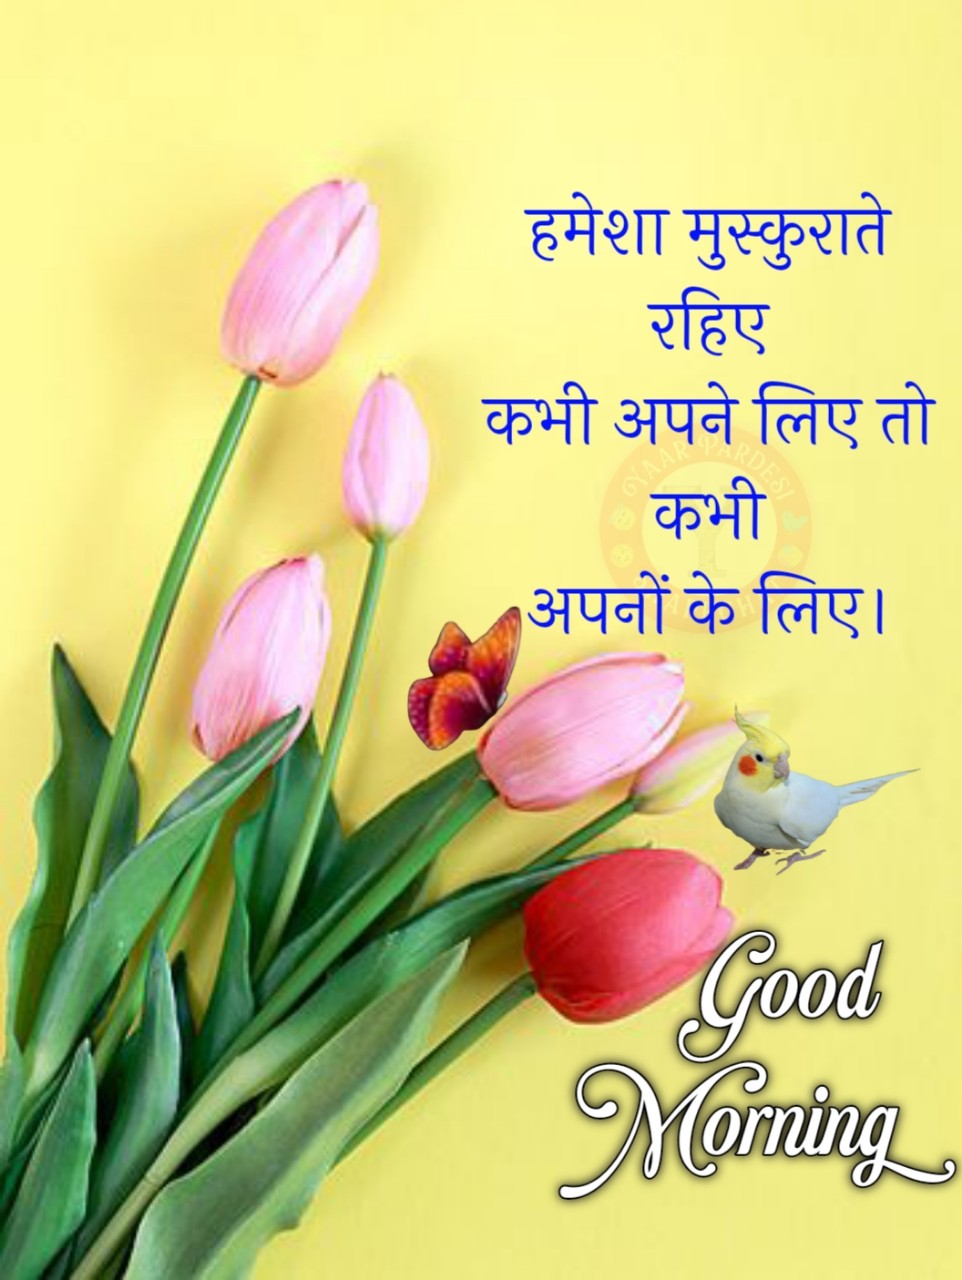 Happy Good Morning Hindi ()